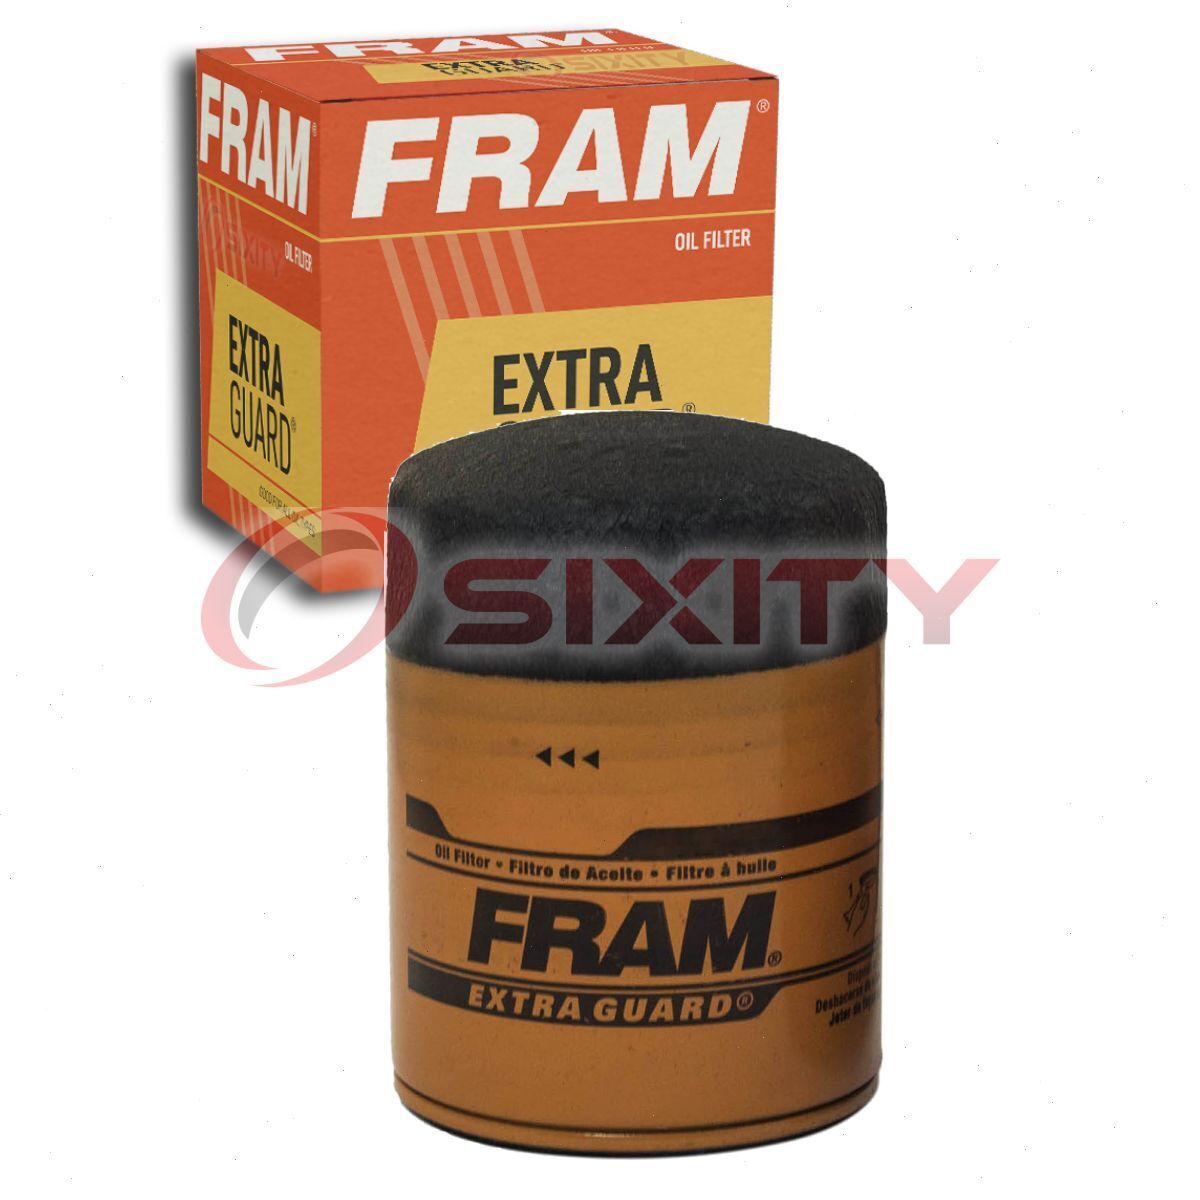 FRAM Extra Guard Engine Oil Filter for 1978-1987 Oldsmobile Cutlass Salon py